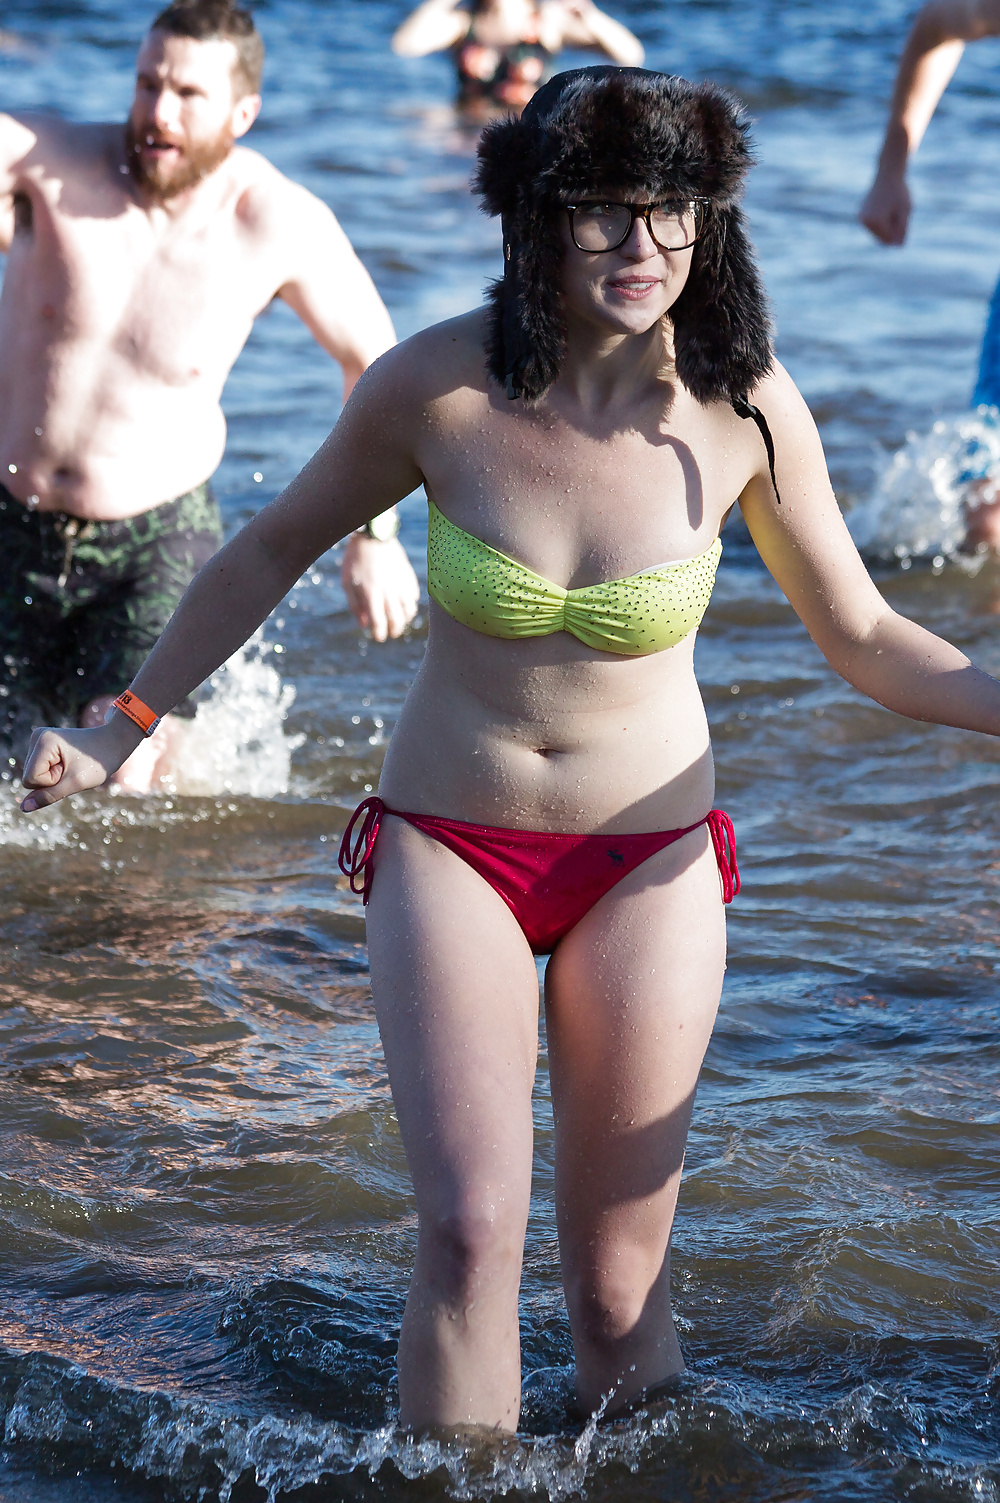 candid voyeur beach teen - upskirt panties public adult photos